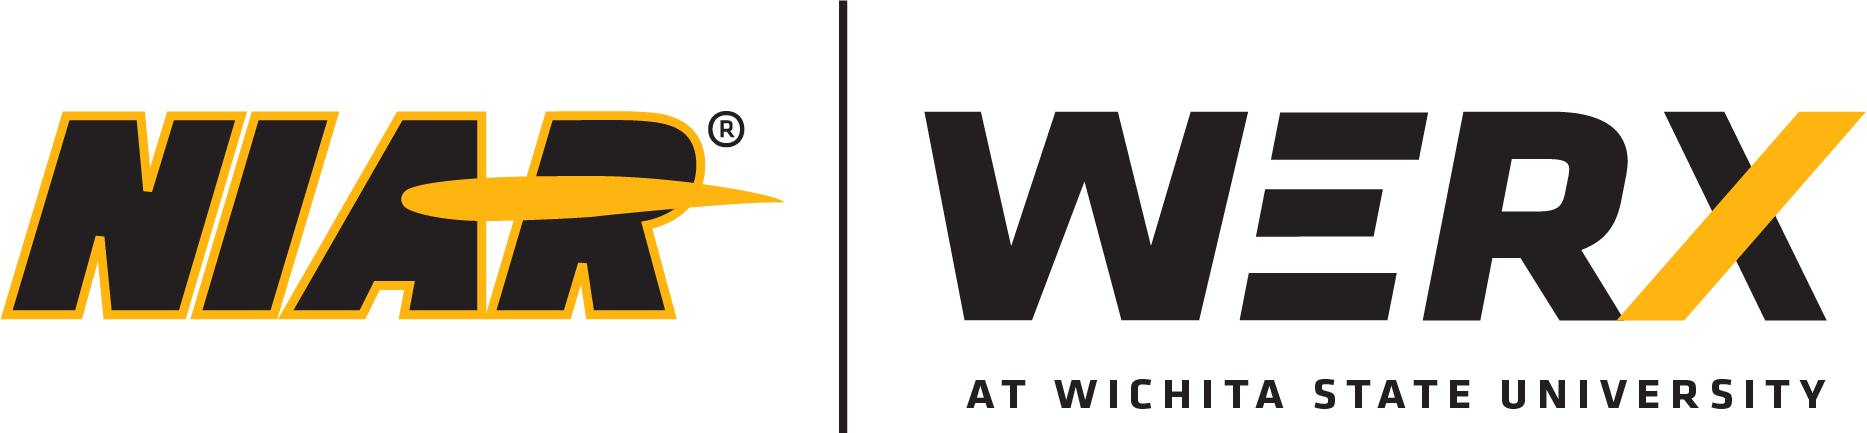 NIAR WERX logo